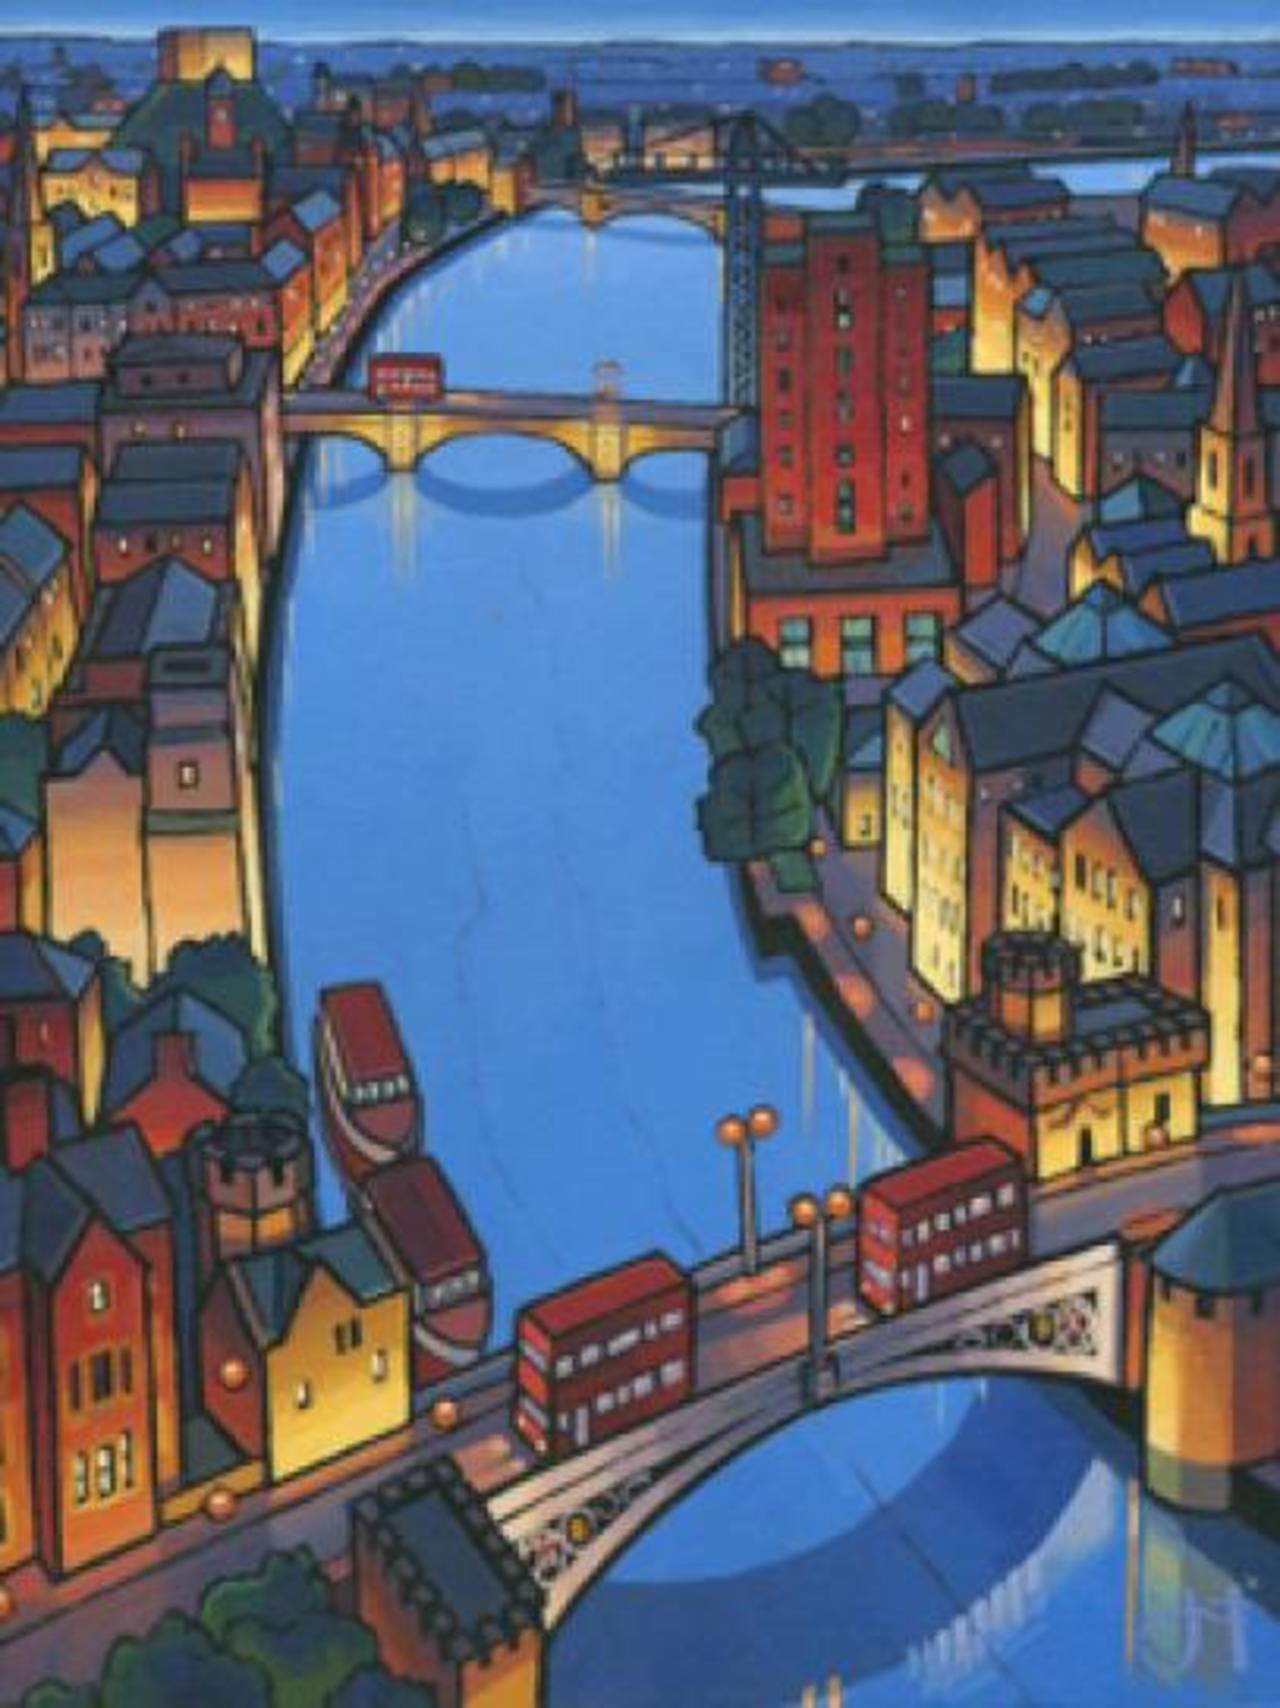 River Ouse, York by Jim Edwards http://bit.ly/1L1jJpq #Art #NEFollowers #York http://t.co/vZM5vpVpNw